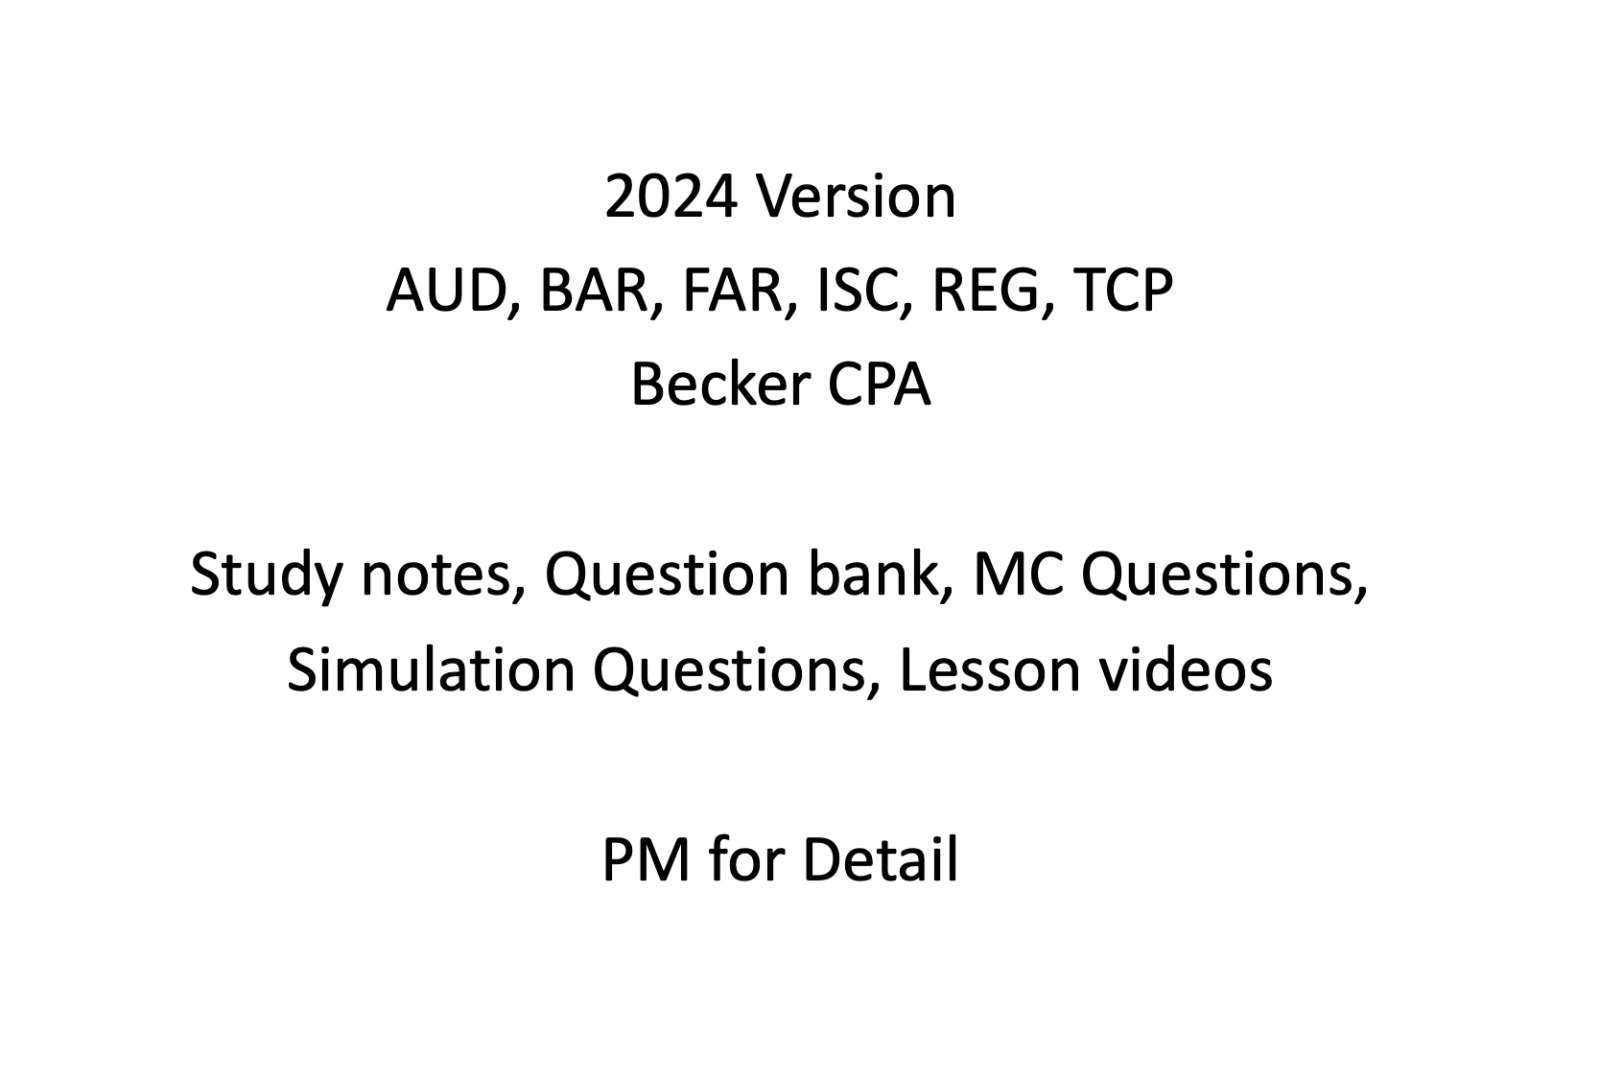 2024 Becker CPA Exam Notes, Qbank, Video, Study Guide AUD BAR FAR ISC REG TCP